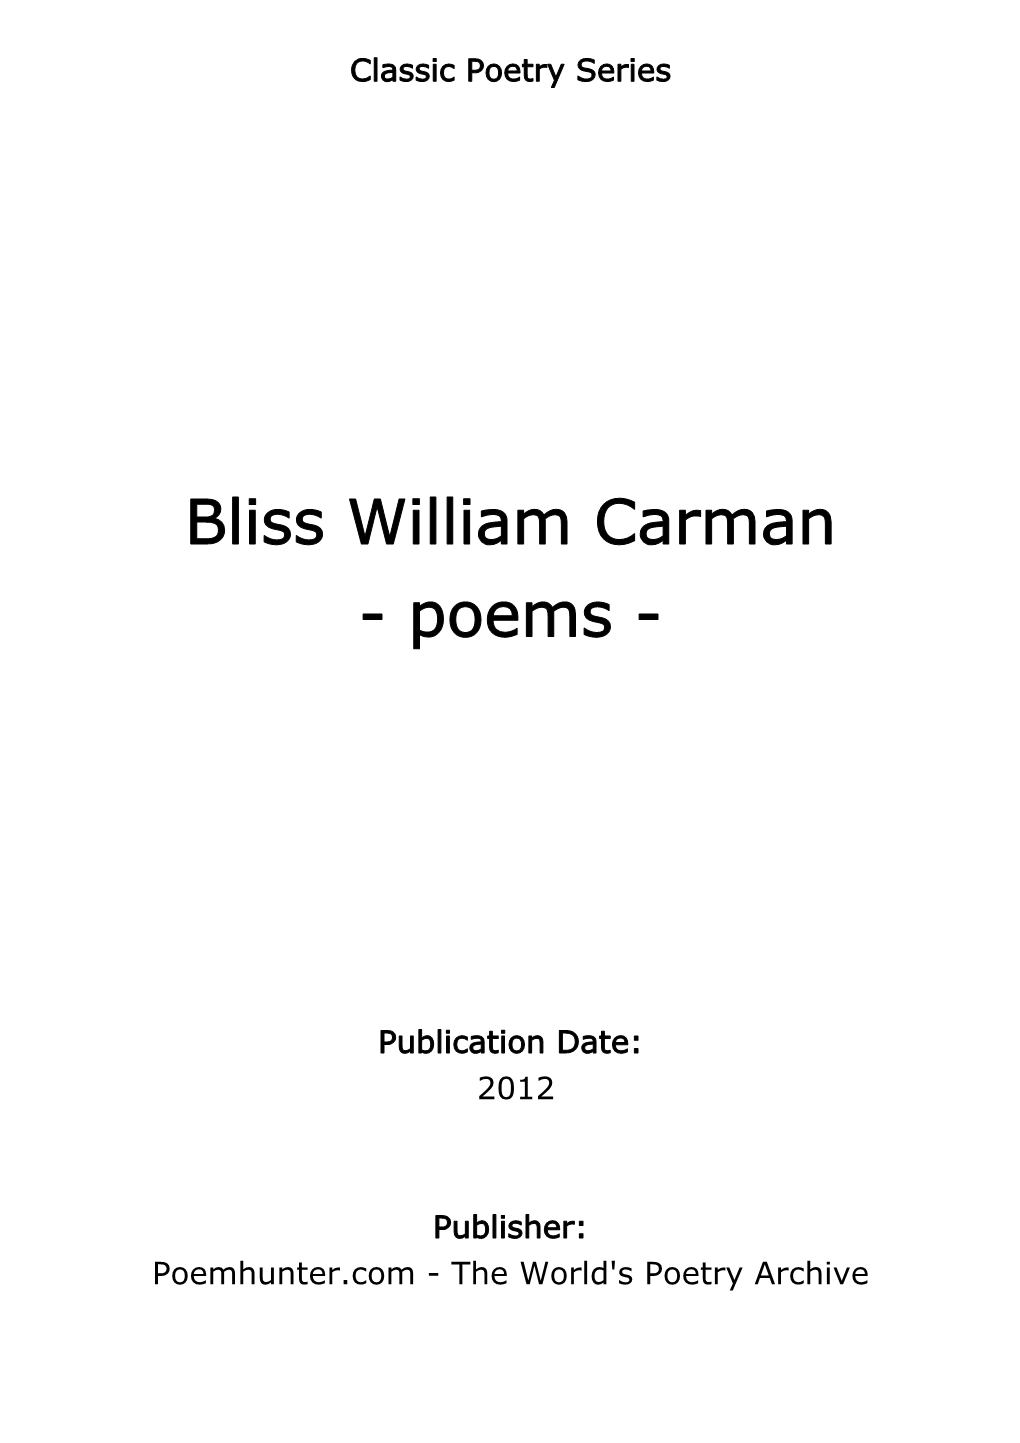 Bliss William Carman - Poems